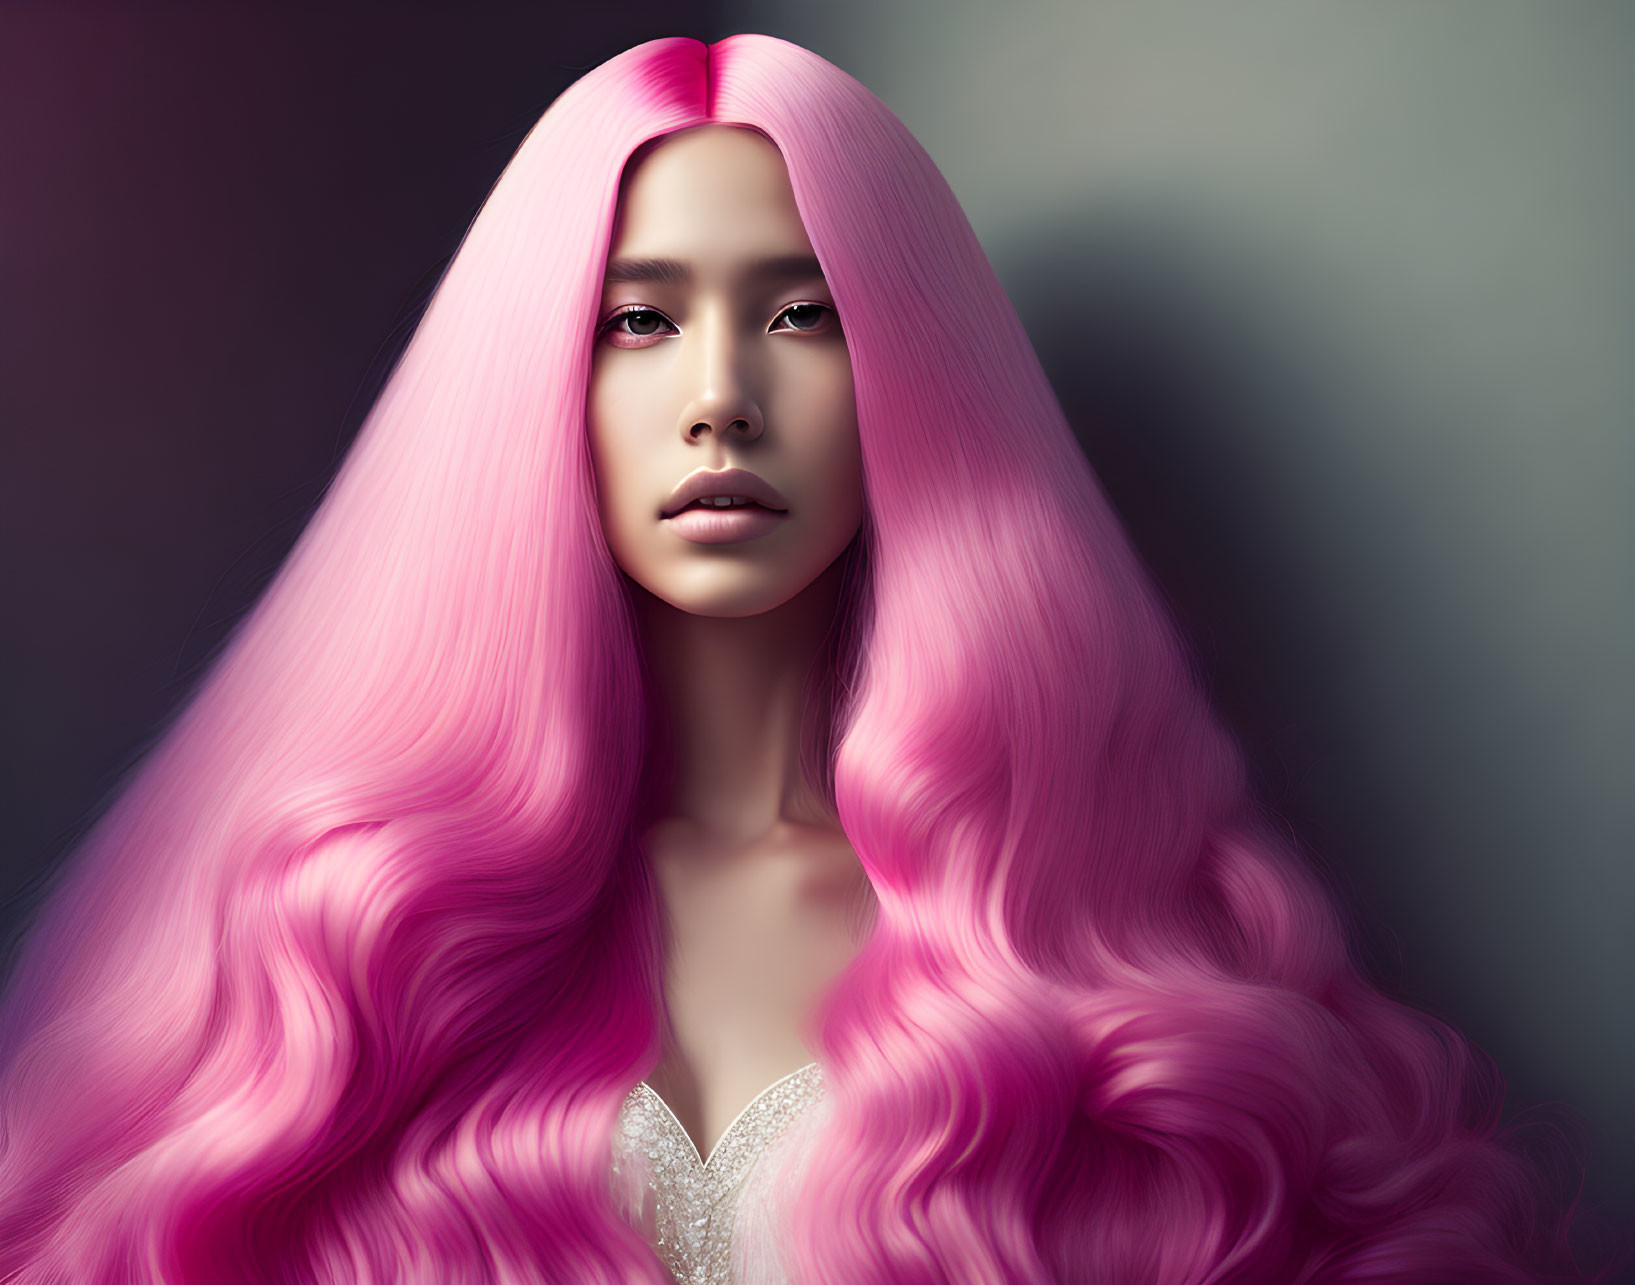 Pink hair girl